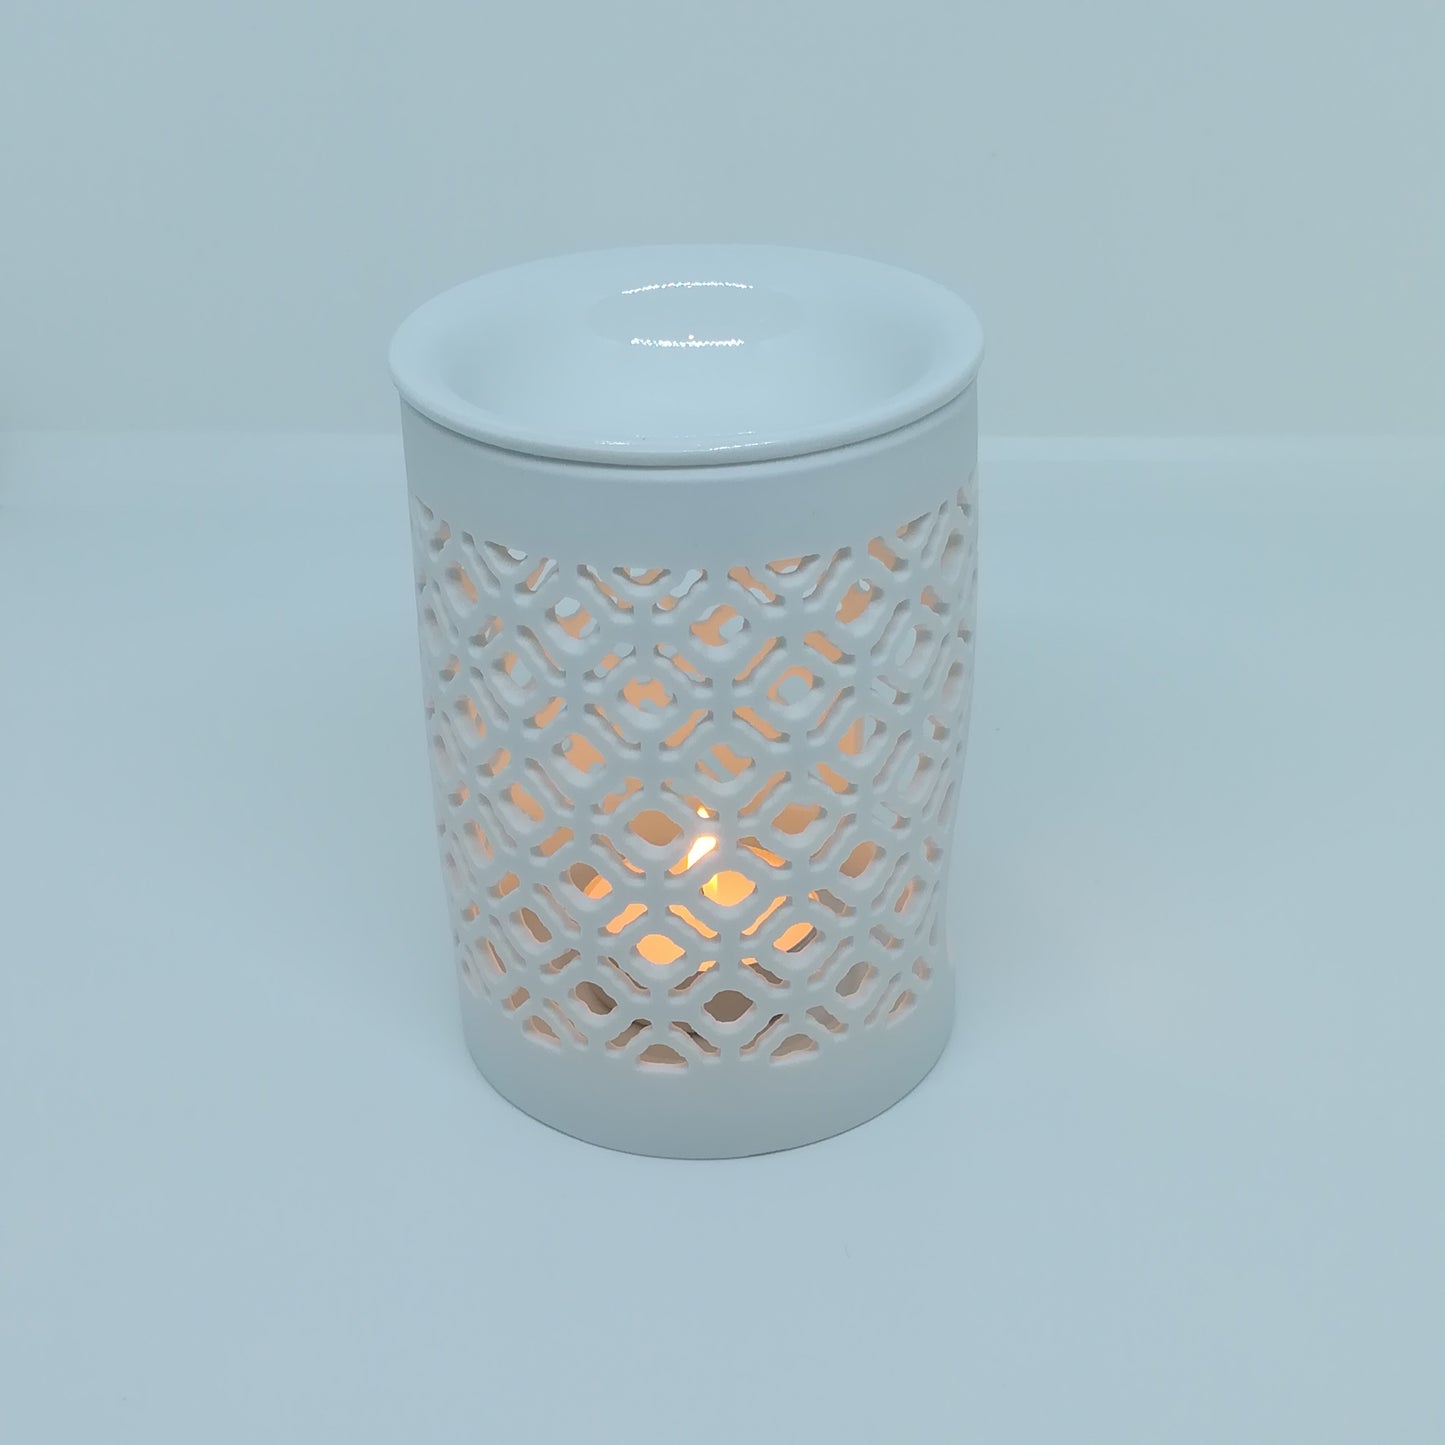 ceramic wax melt burner moroccan lattice pattern